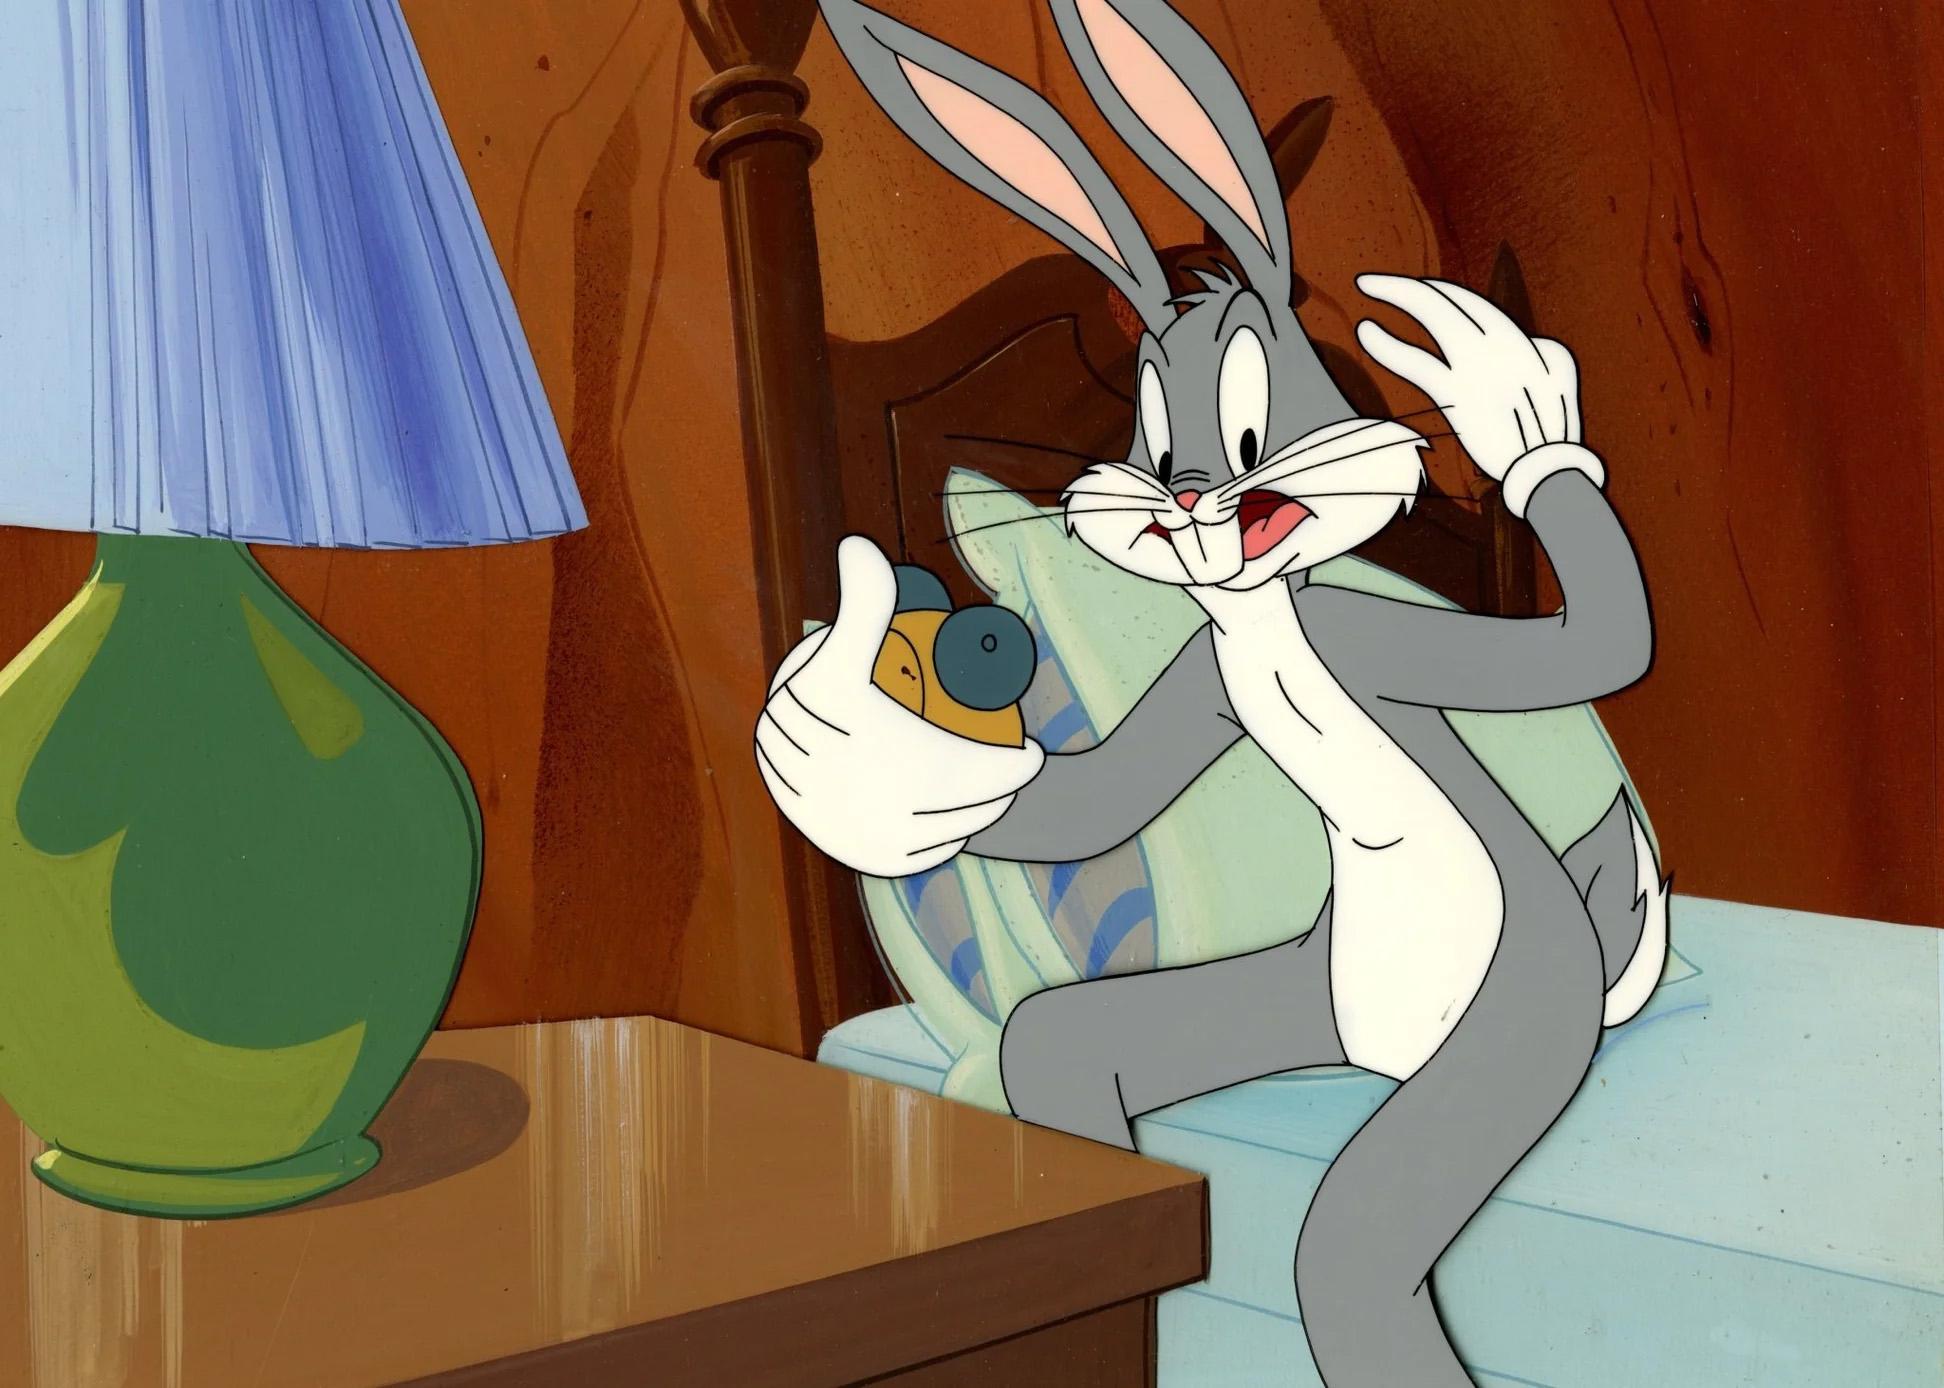 Looney Tunes Original Production Cel on Original Background: Bugs Bunny - Art by Looney Tunes Studio Artists